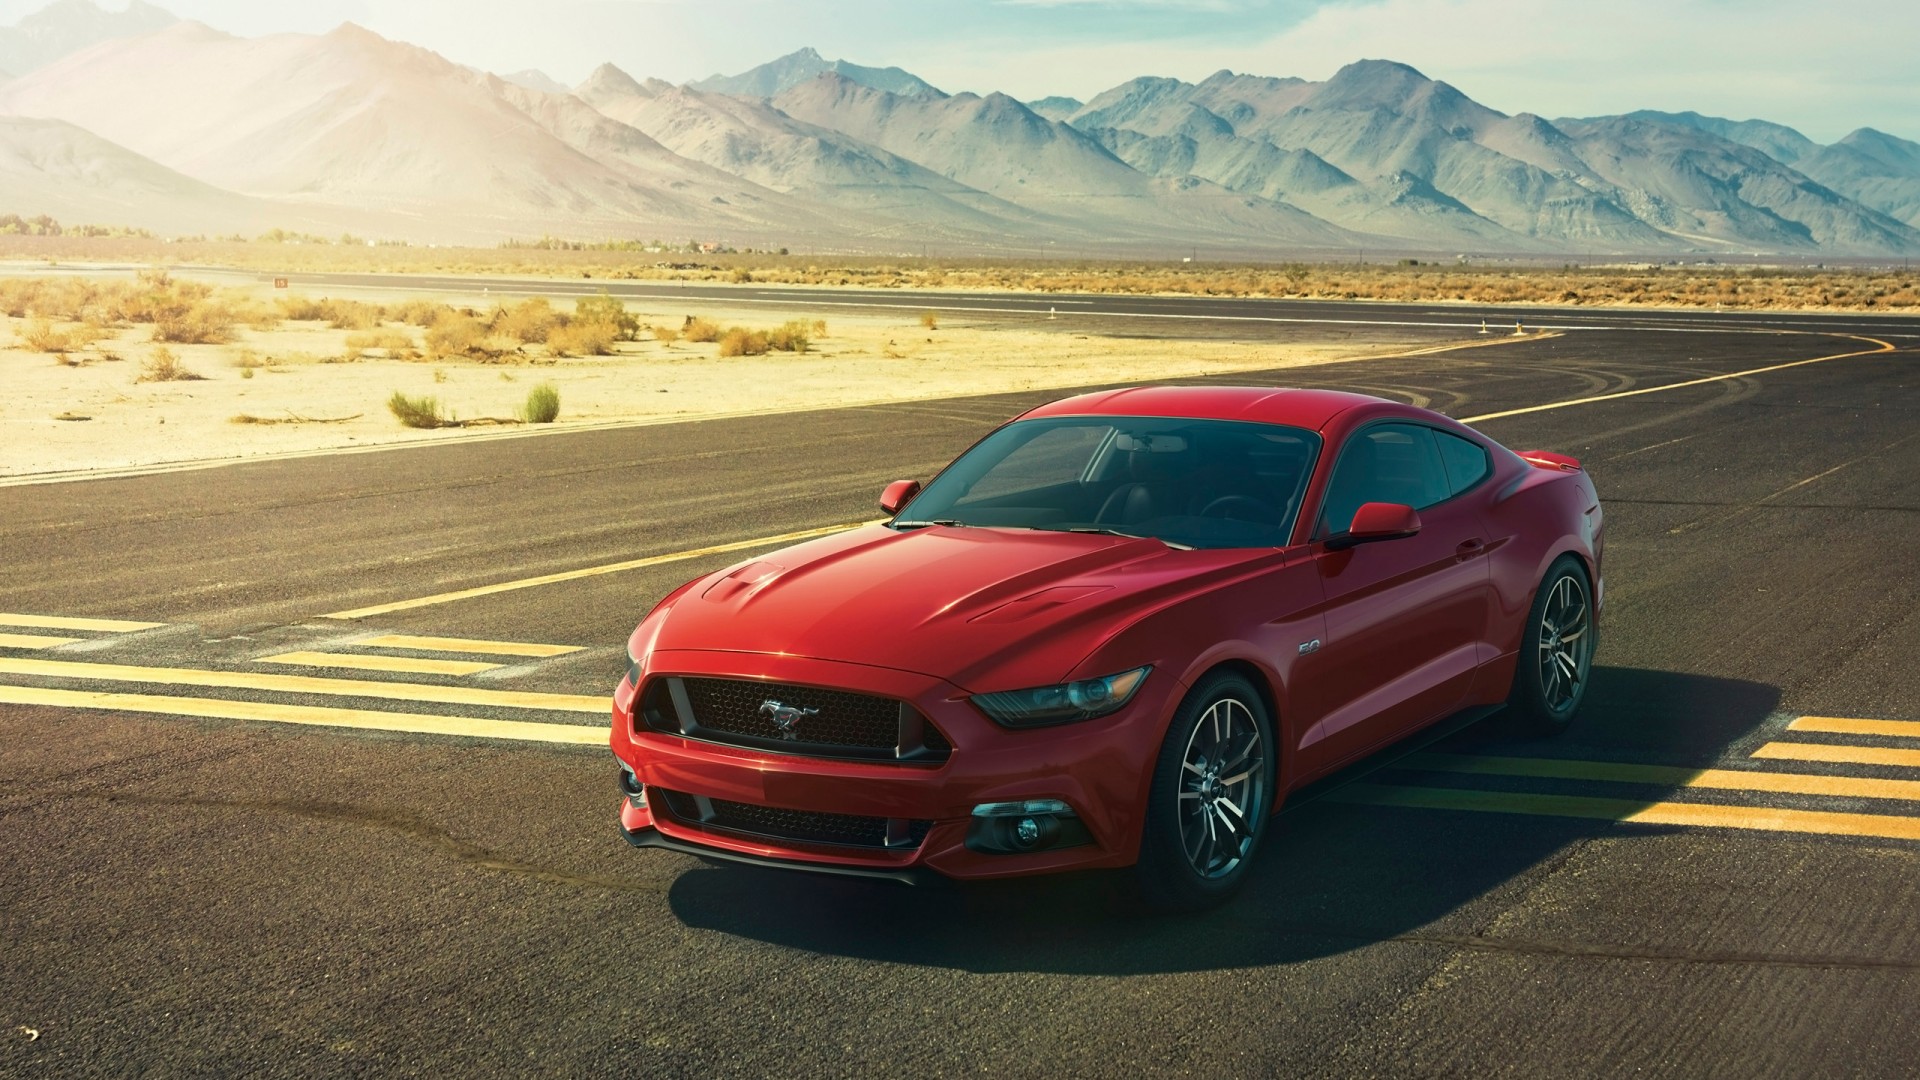 Ford Mustang 2015 Wallpaper | HD Car Wallpapers | ID #3985
 2015 Ford Mustang Wallpaper Hd